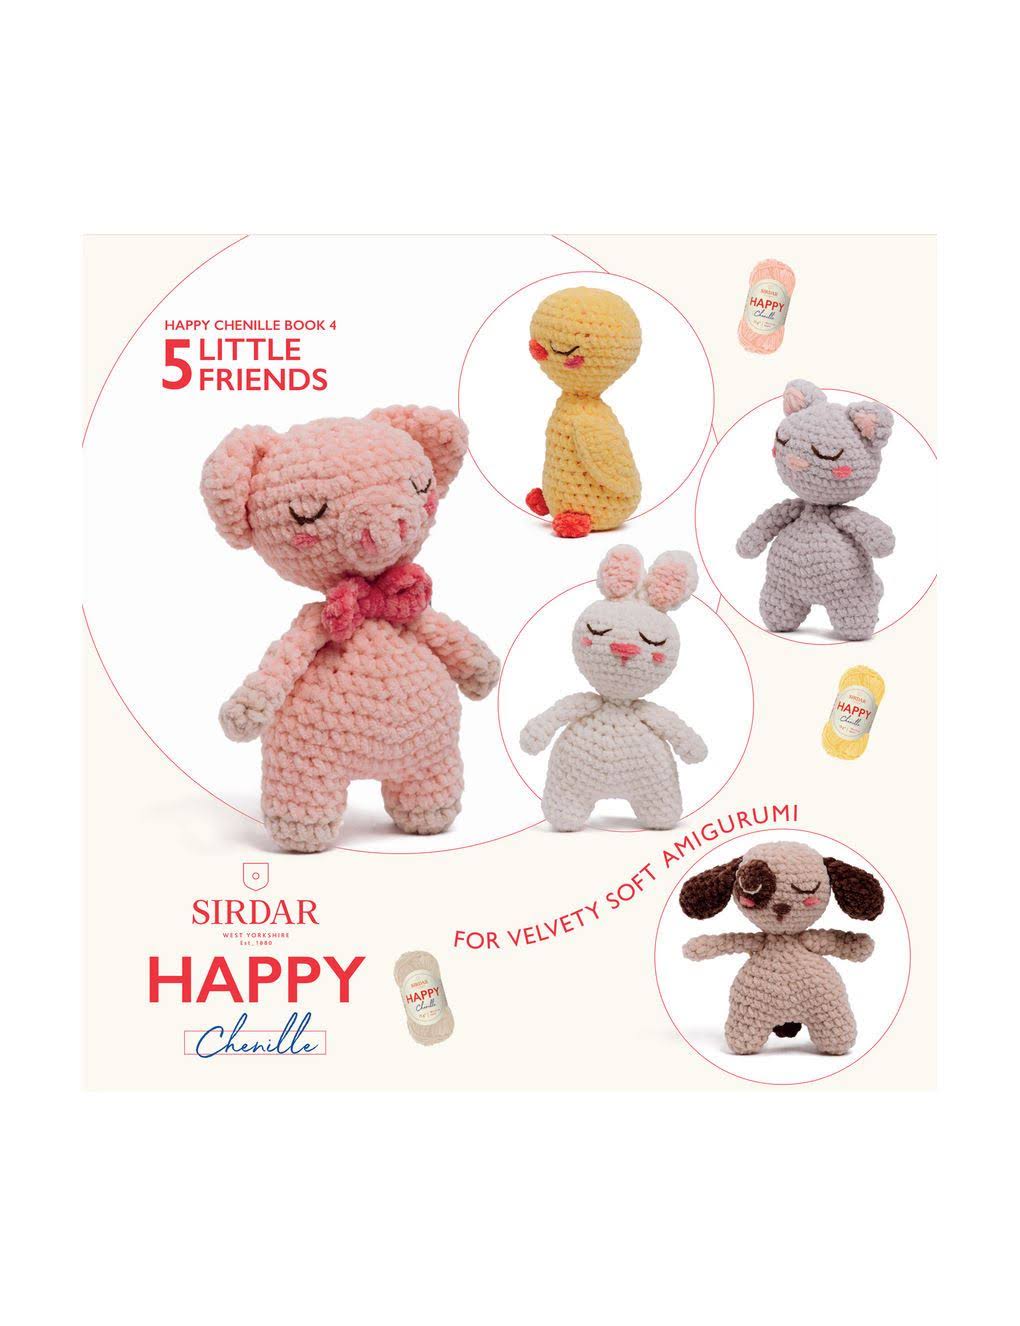 Sirdar Happy Chenille Crochet Amigurumi Toys Pattern Book 4 Little Friends